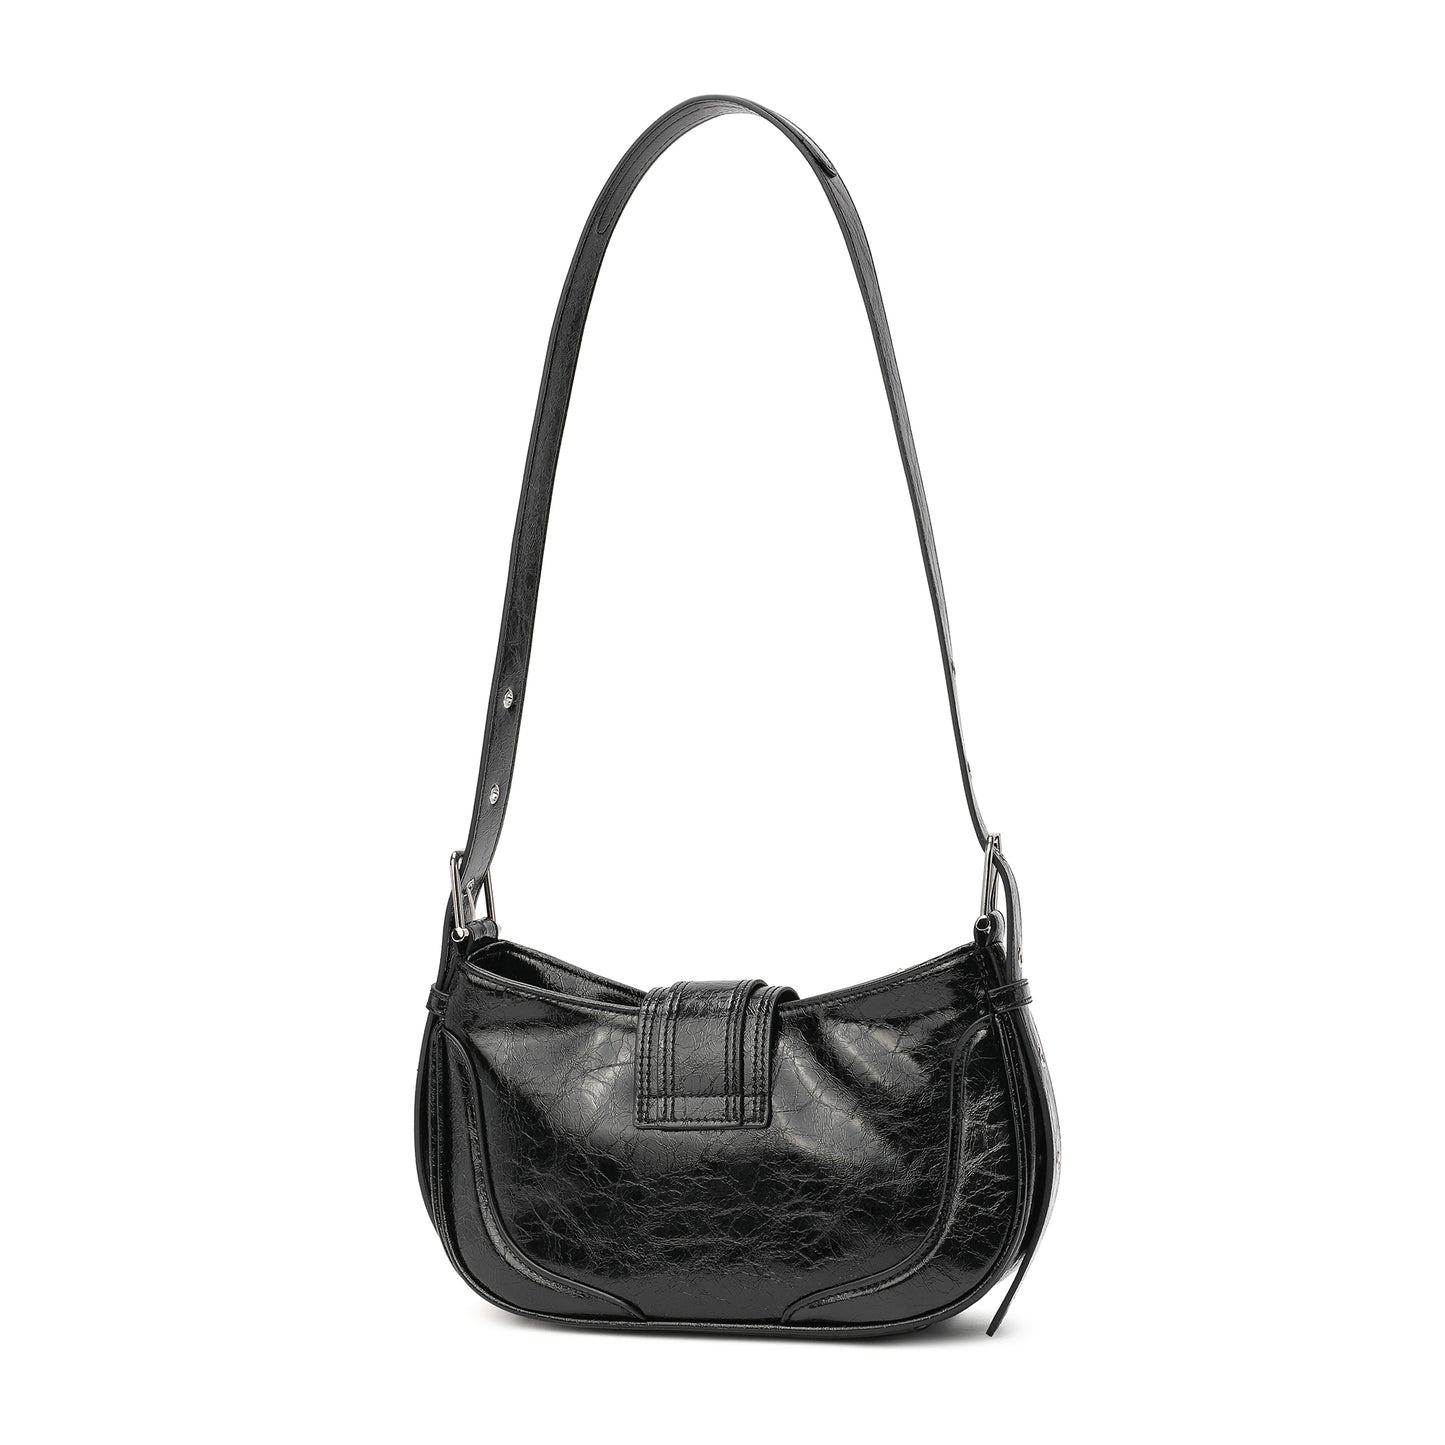 Tiffany & Fred cracked Leather Crossbody/Shoulder Bag